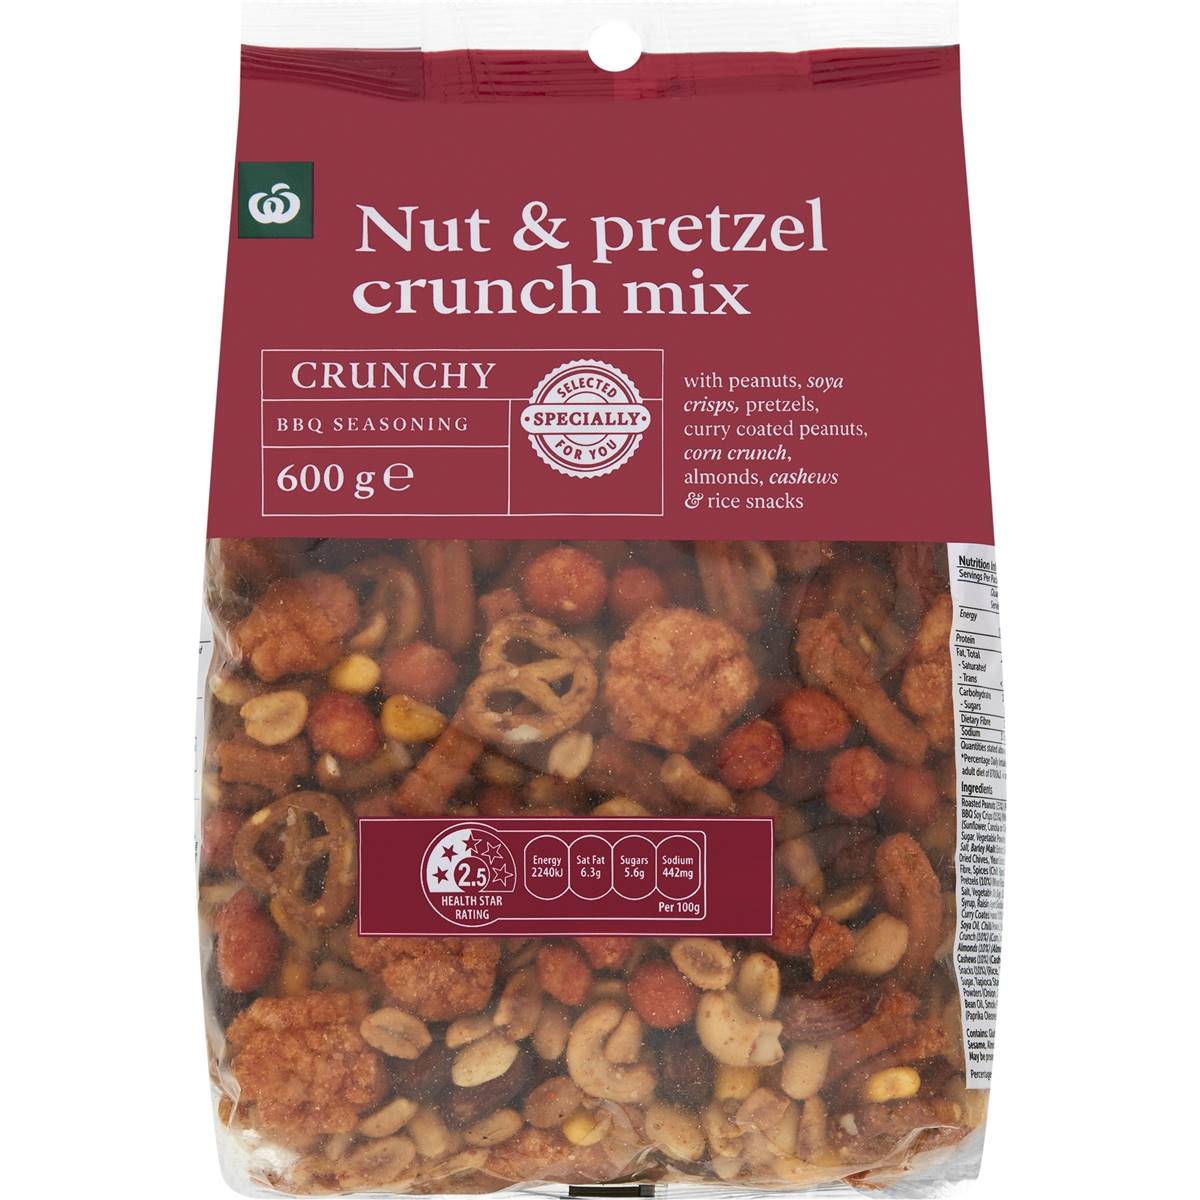 Calories in Woolworths Nut & Pretzel Crunch Mix